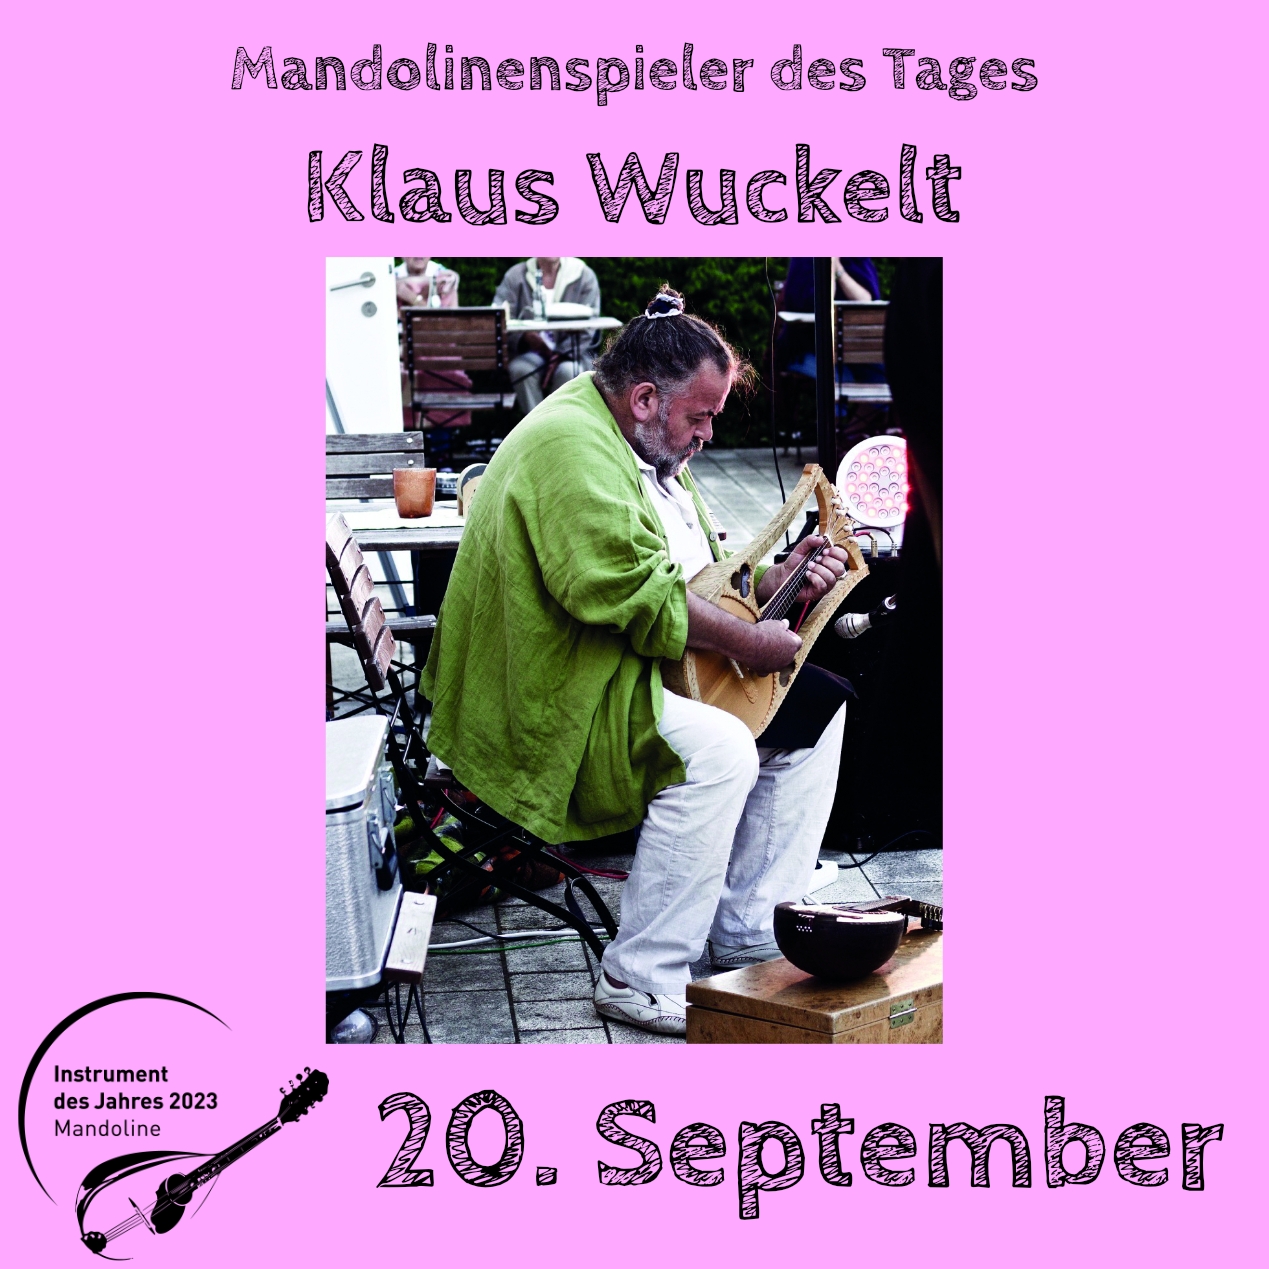 20. September - Klaus Wuckelt Mandoline Instrument des Jahres 2023 Mandolinenspieler Mandolinenspielerin des Tages